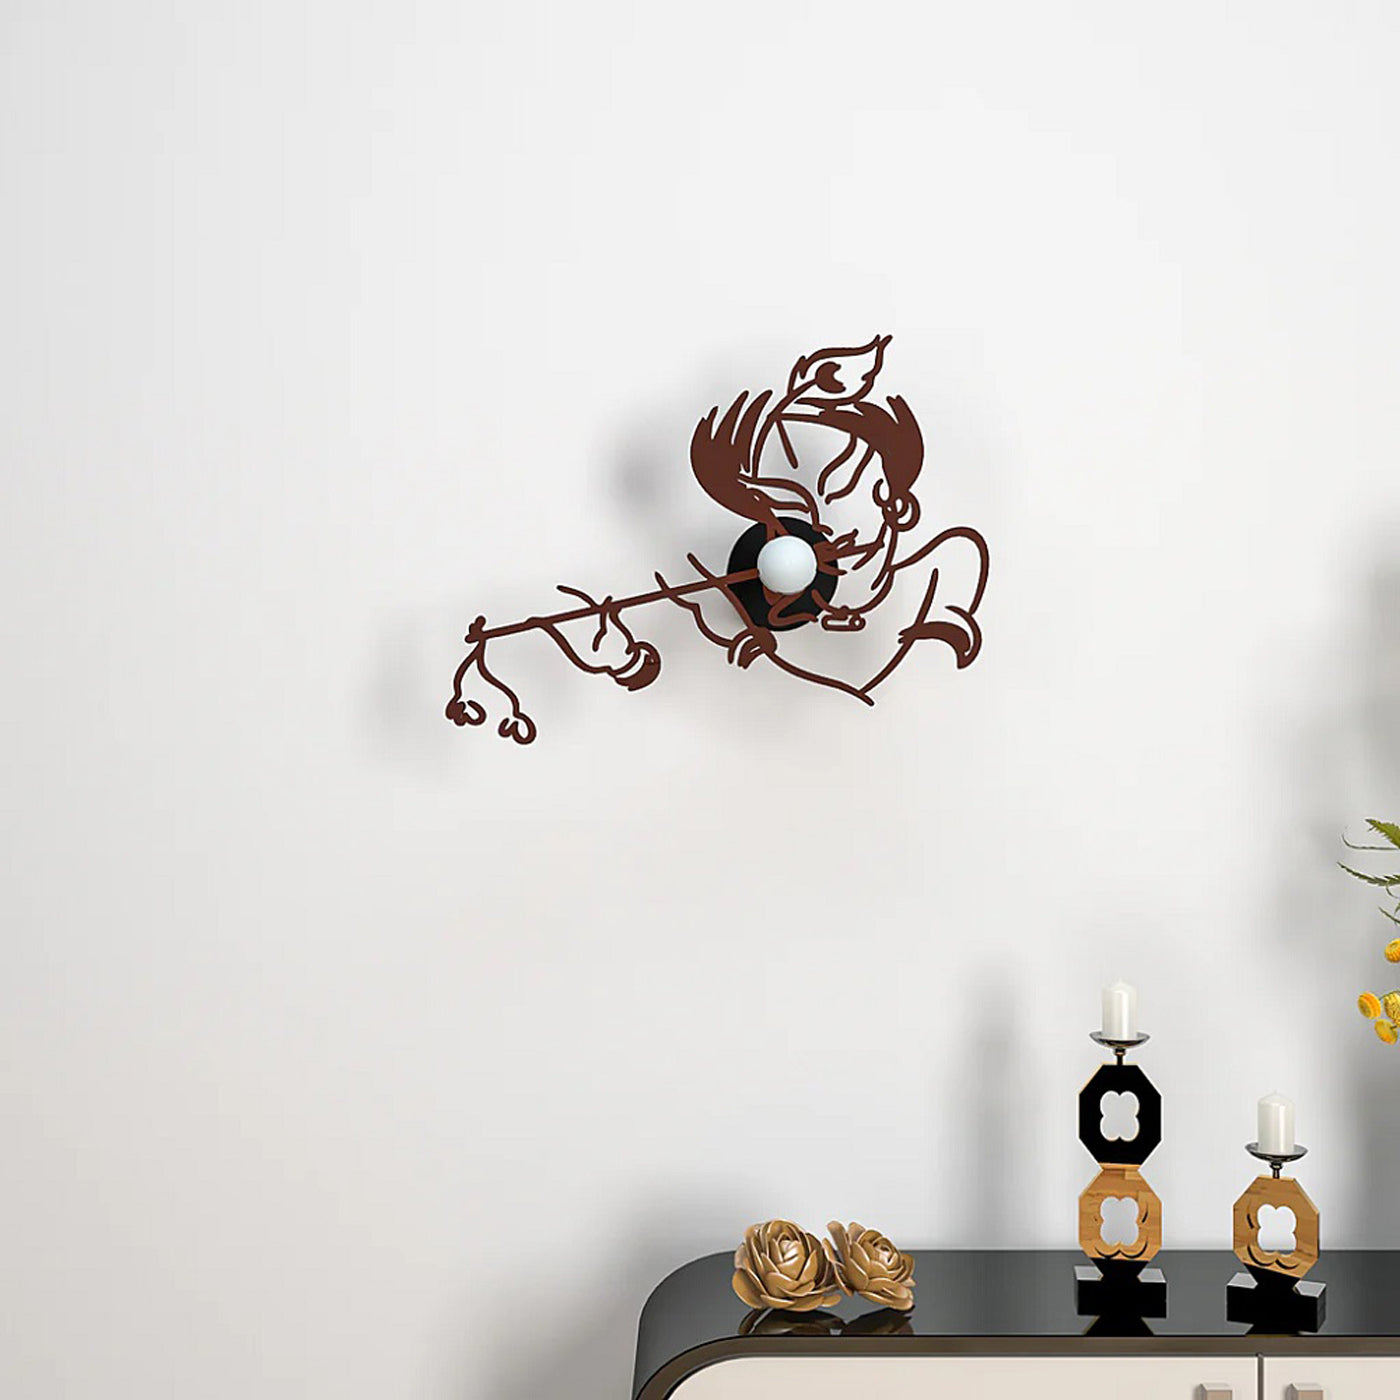 Murli Krishna Shadow lamp for Home / Office wall decor